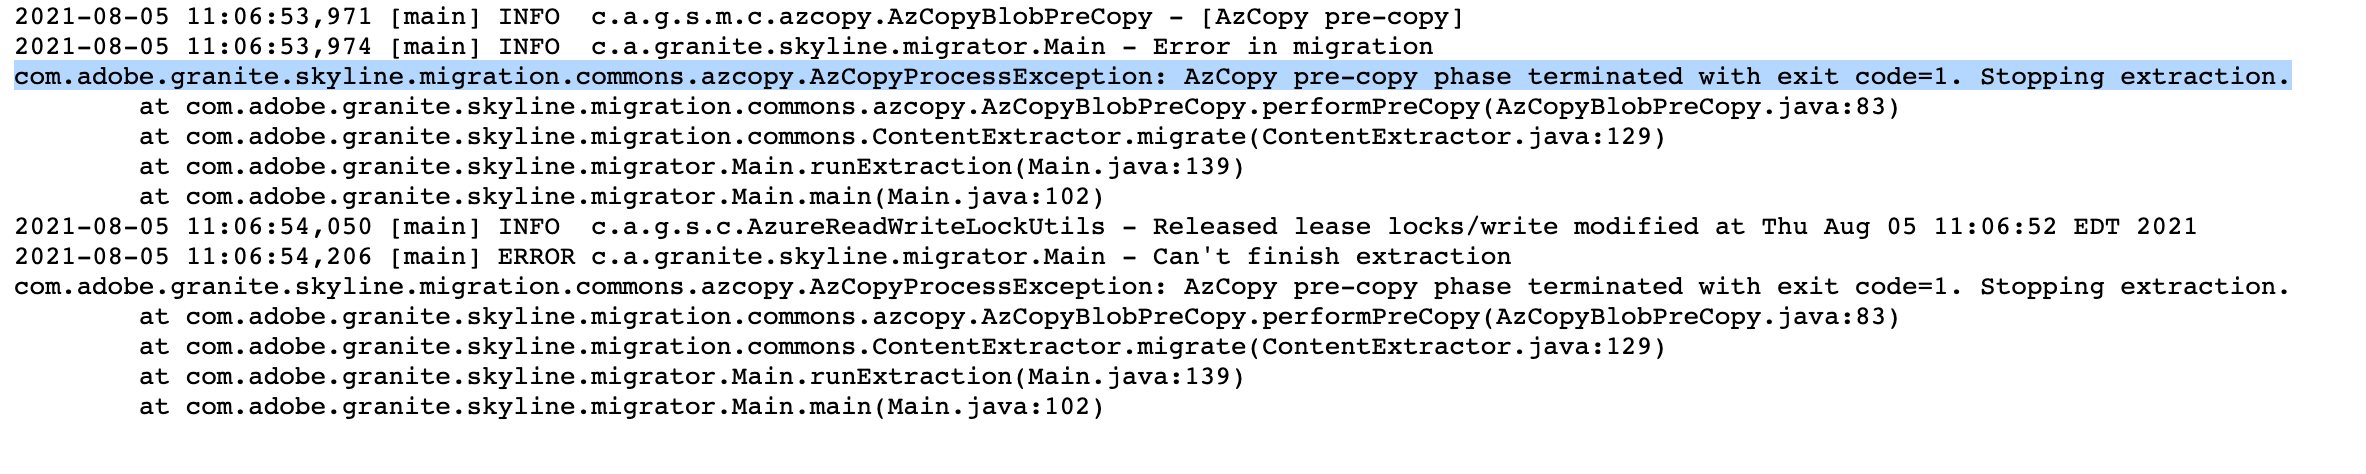 AzCopy config error stacktrace details